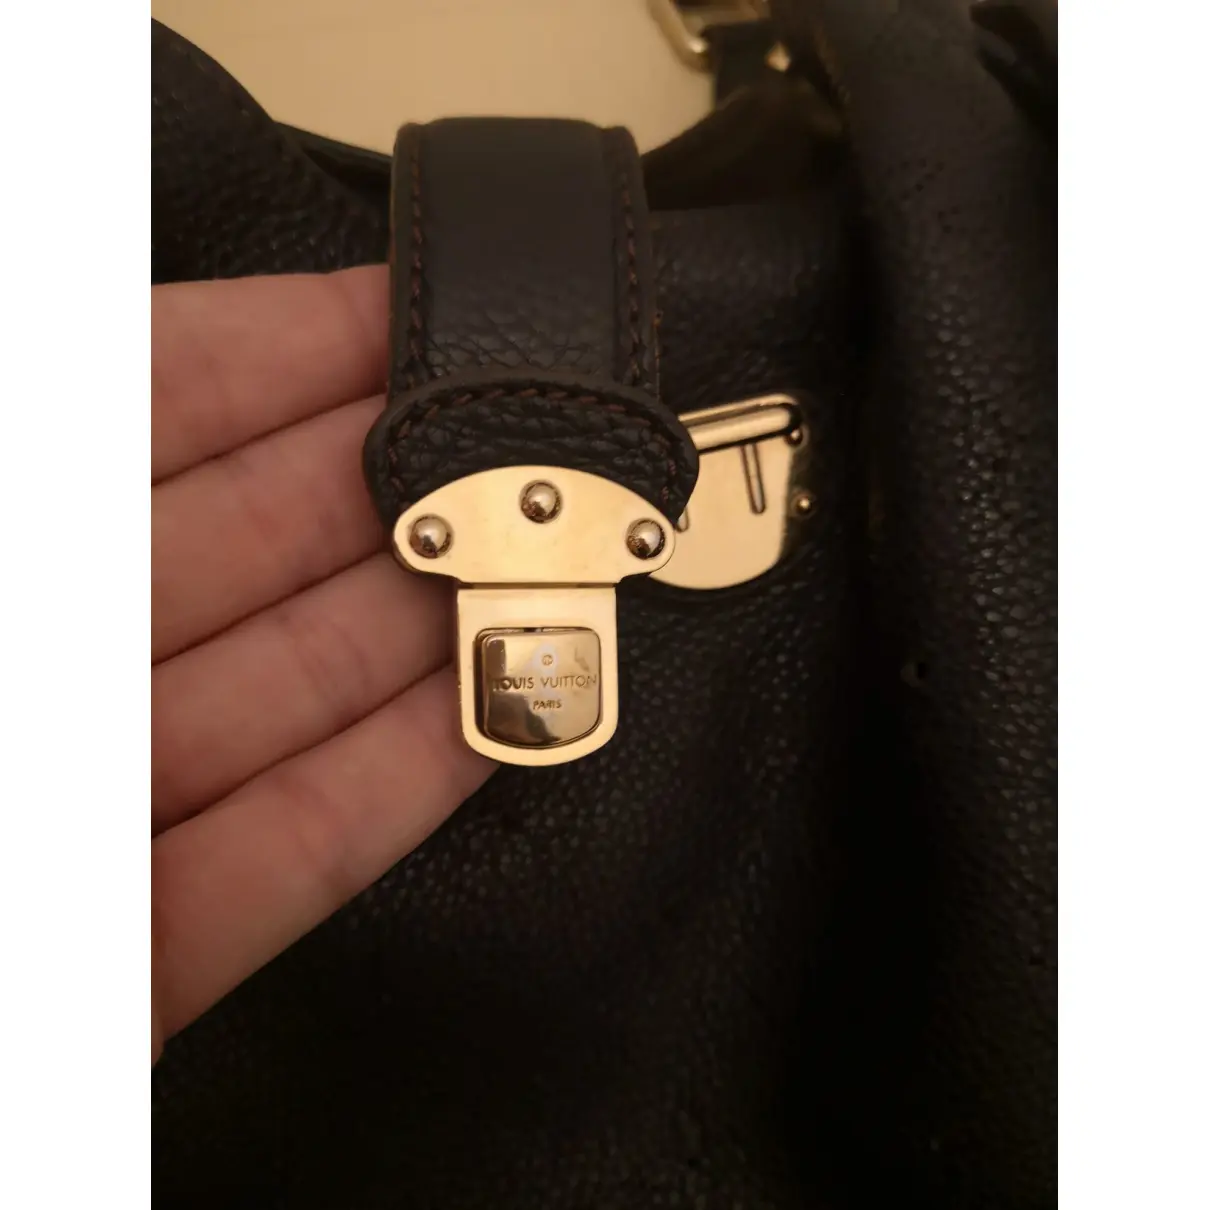 Mahina leather handbag Louis Vuitton